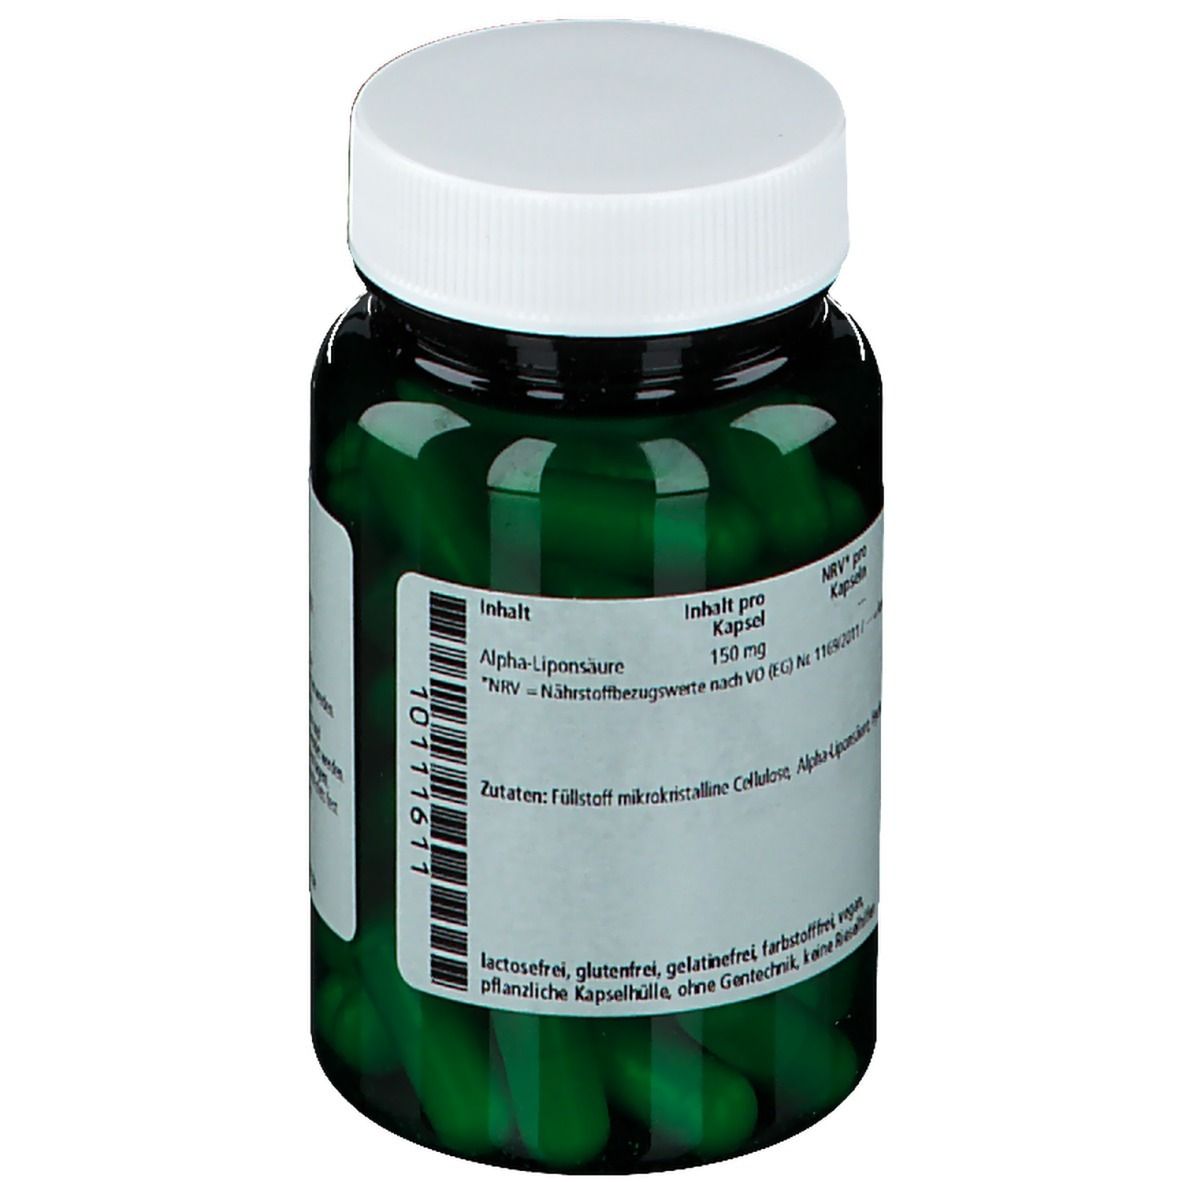 Liponsäure 150 mg